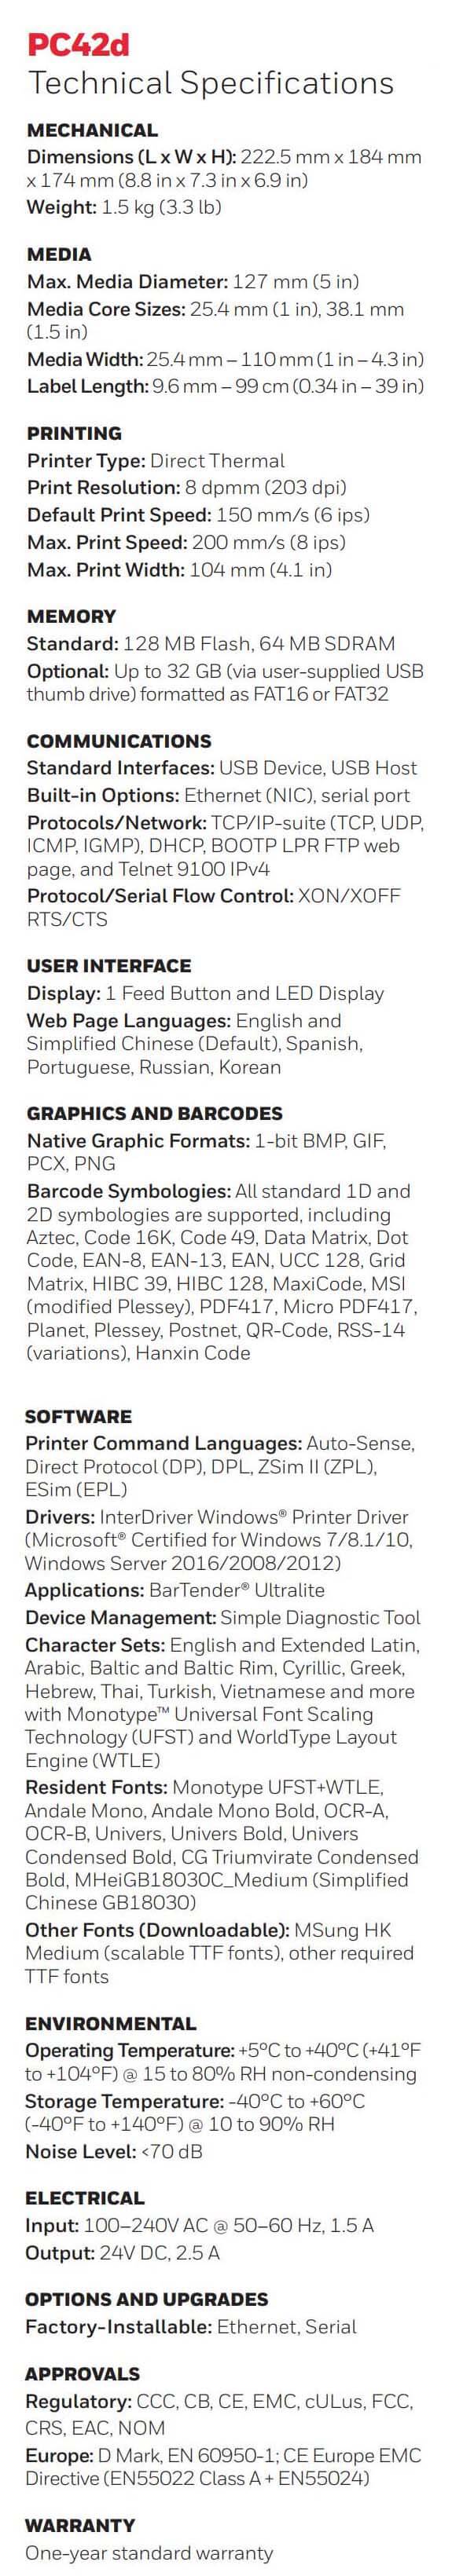 Honeywell PC42D Desktop Direct Thermal Barcode Printer data sheet